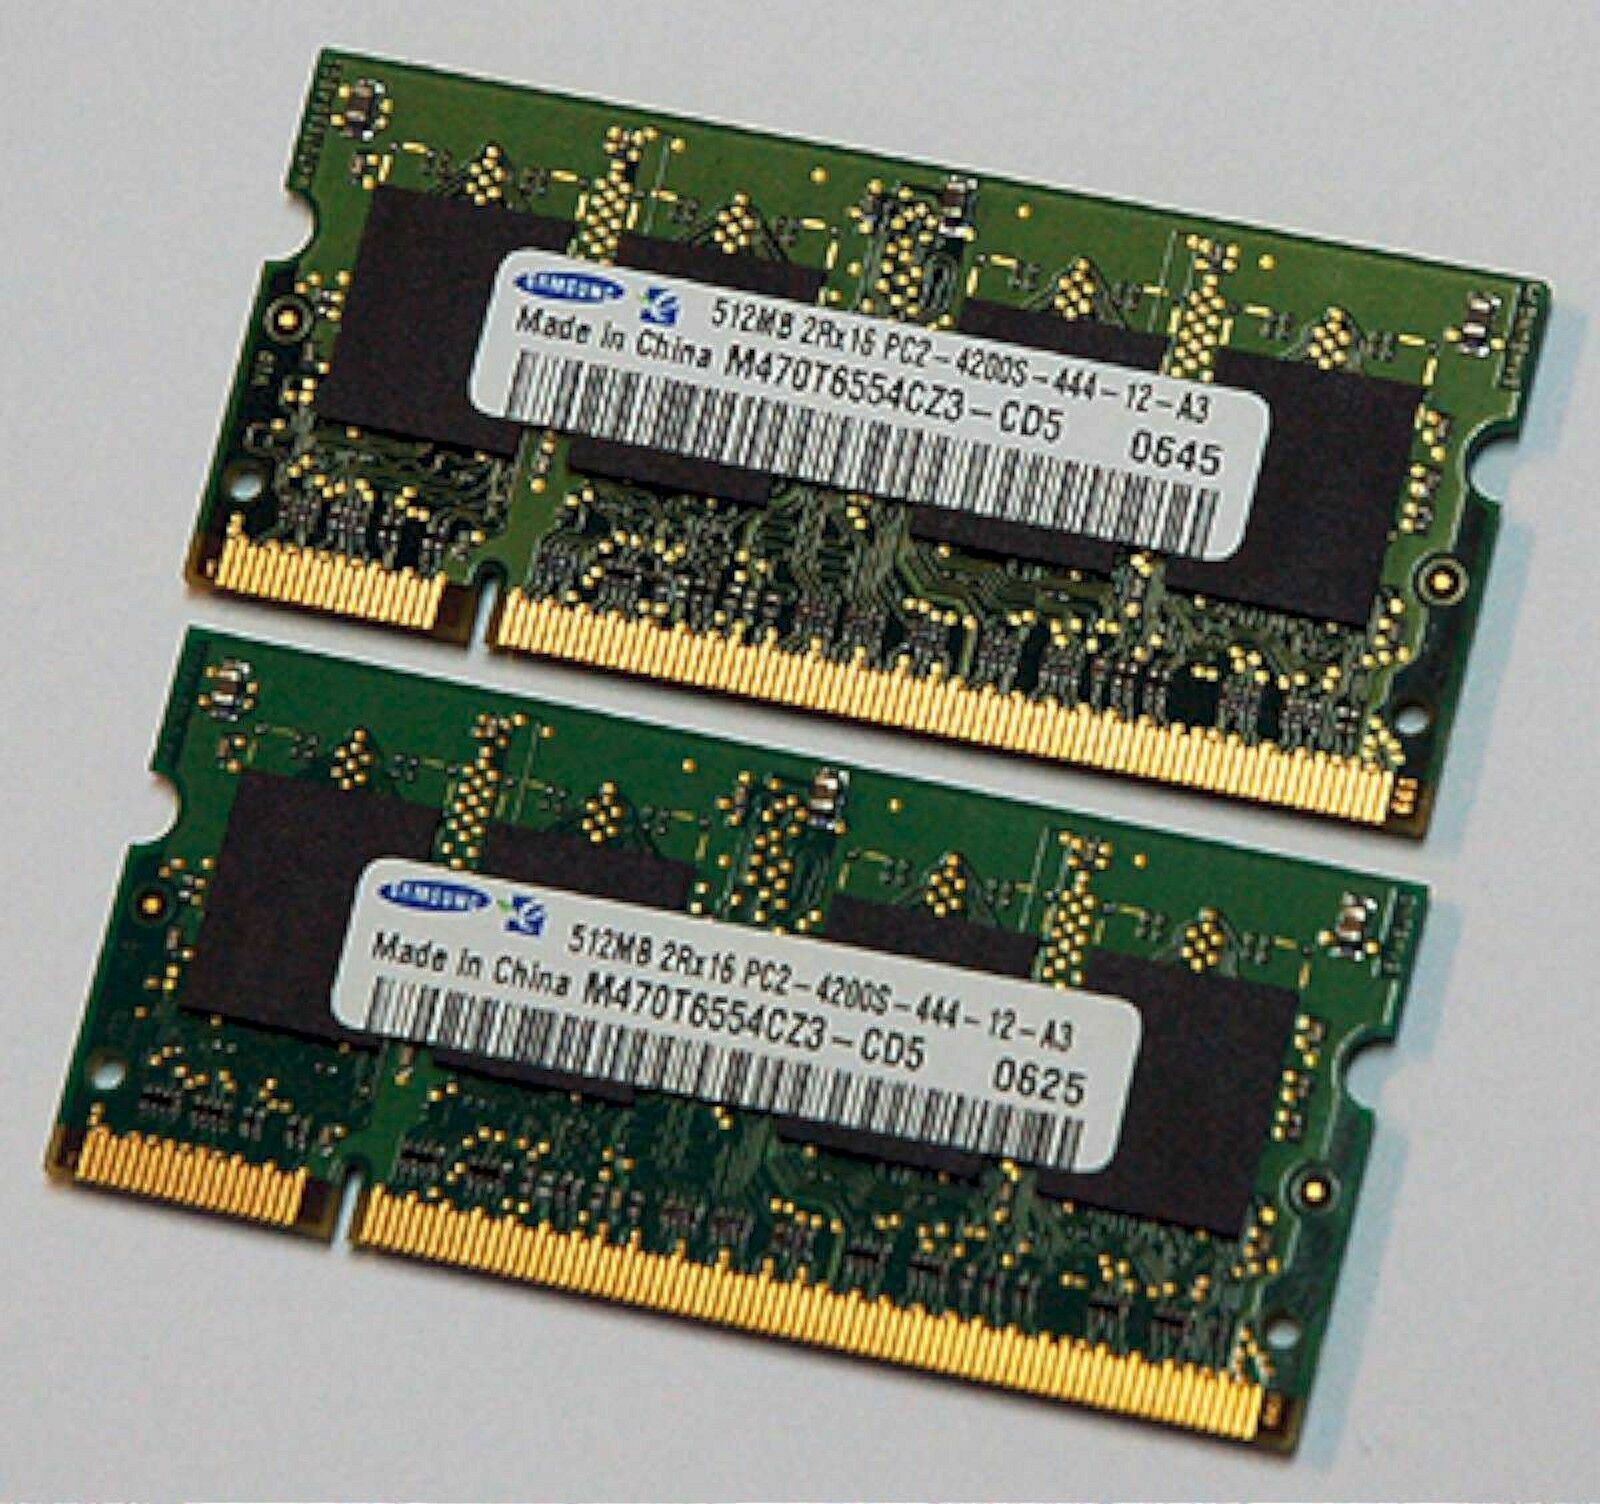 SAMSUNG Laptop 1GB=2x512mb DDR2 RAM Memory Sticks PC2-4200S-444-12-A3 PC4200 OEM